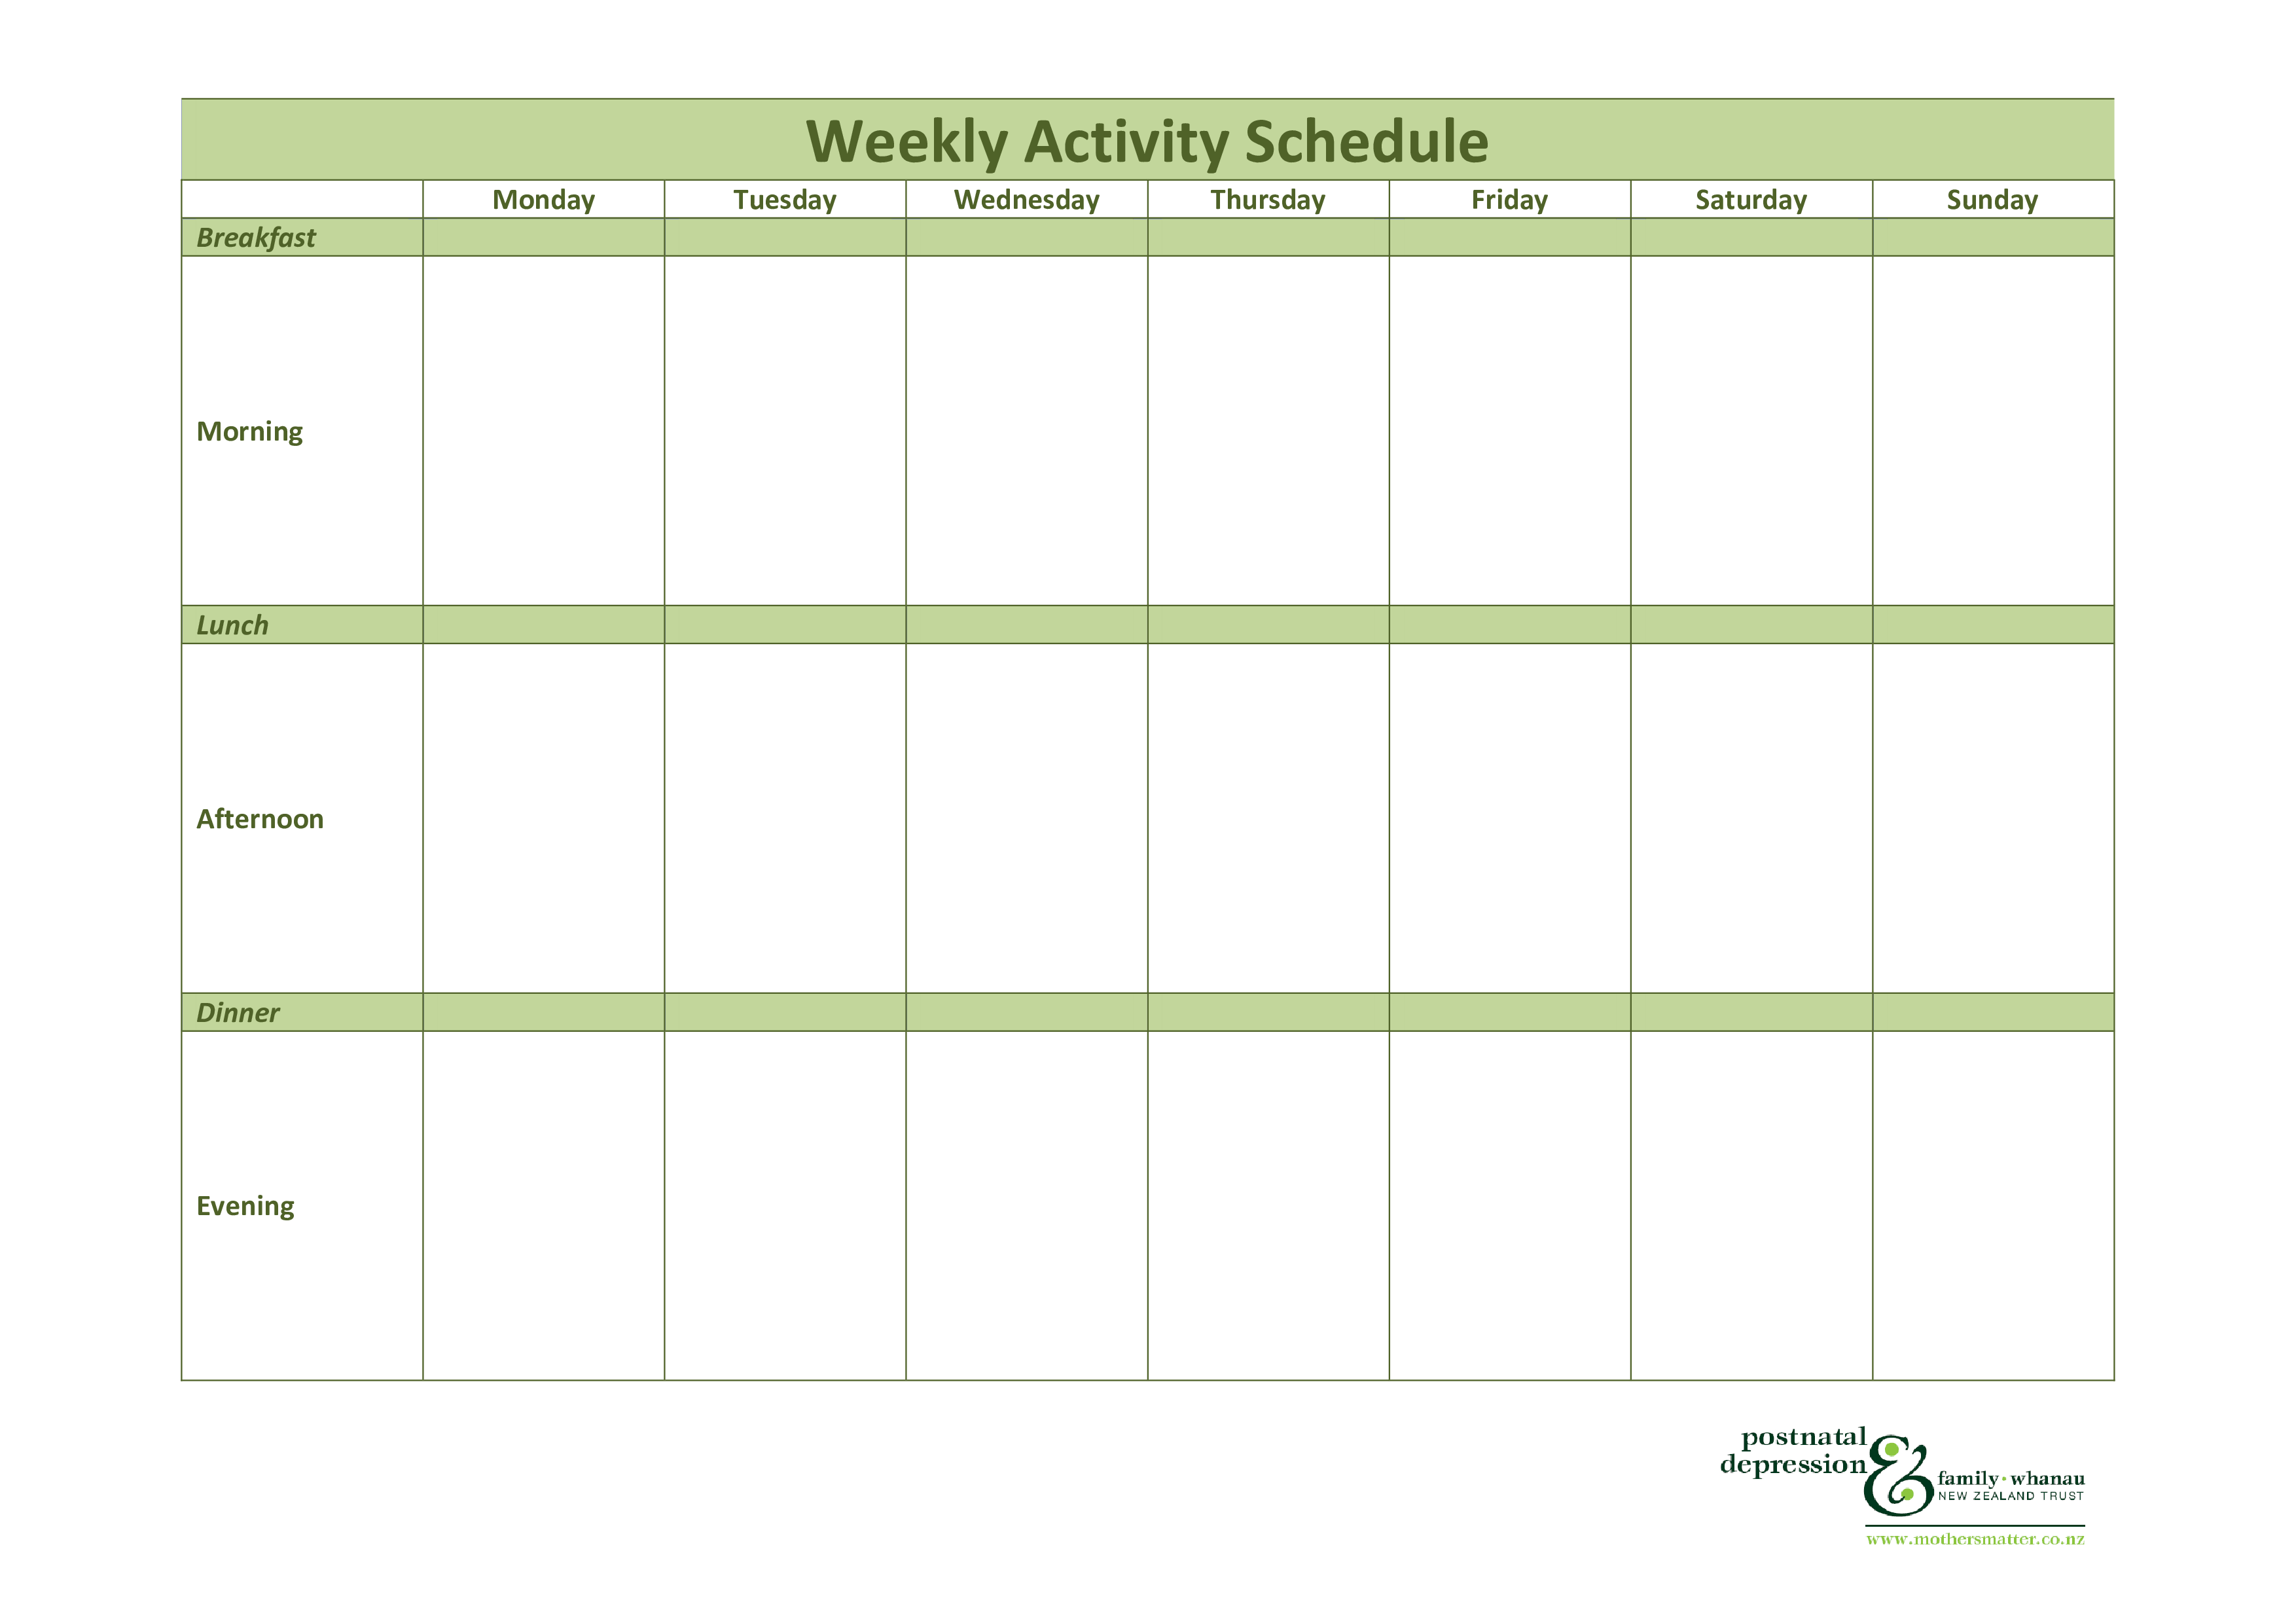 Weekly Activity Schedule main image